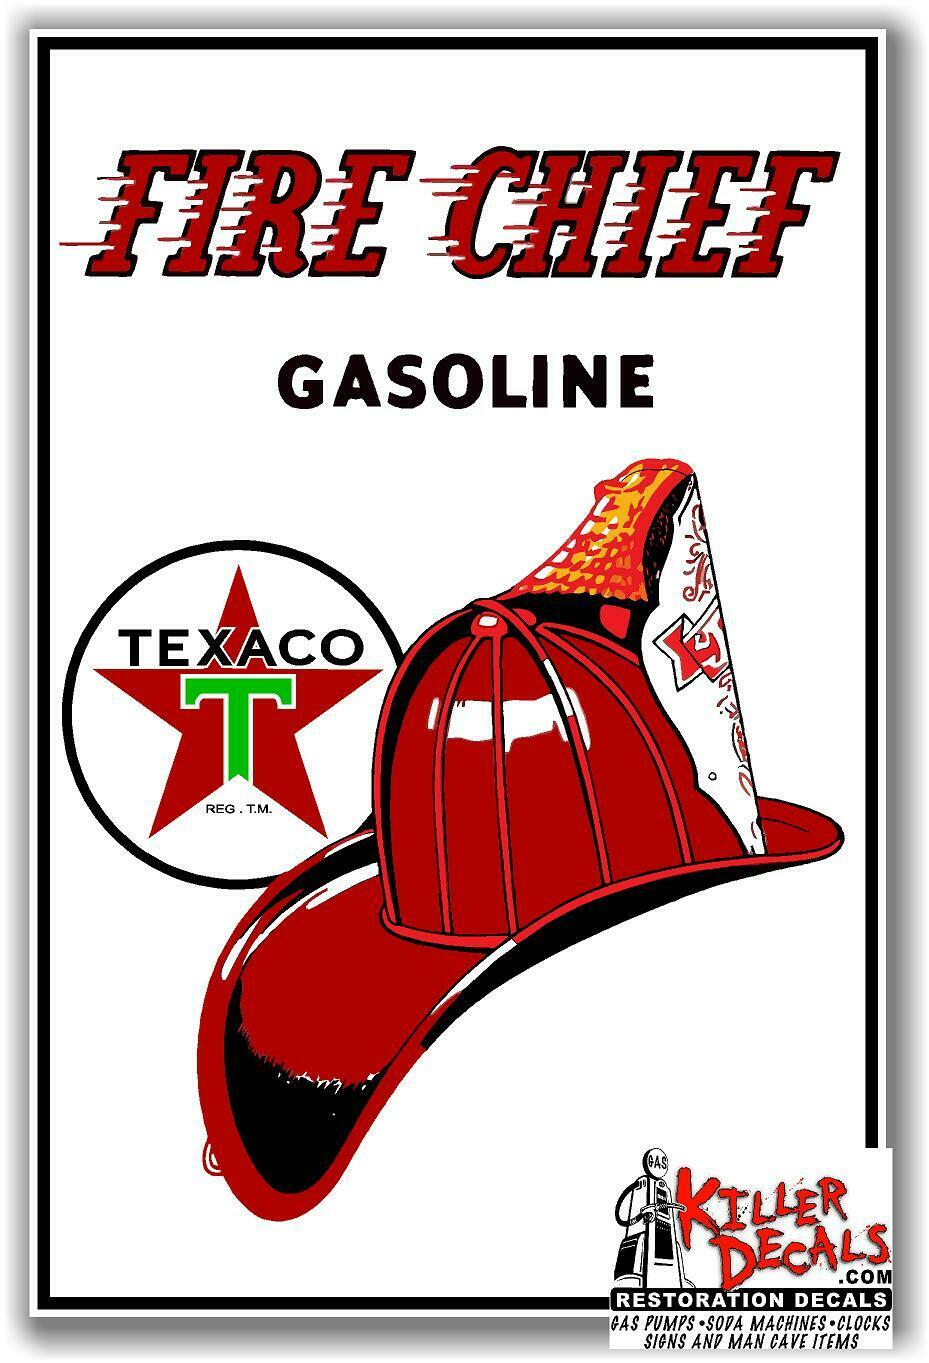 17" X 12" Texaco Fire Chief Gasoline Decal Oil Can / Gas Pump / Lubster (texa-2)